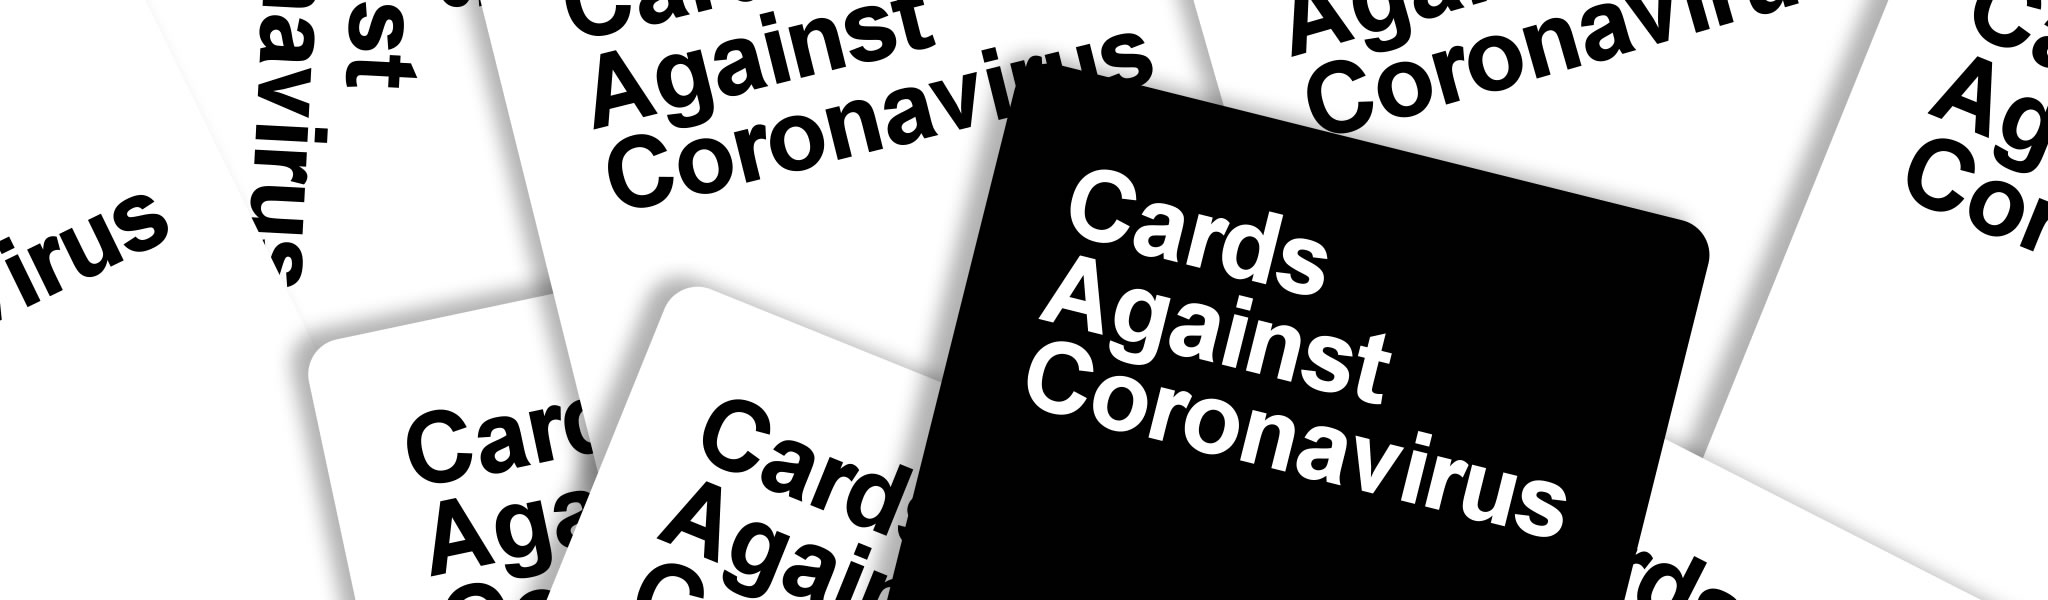 Cards Against Coronavirus